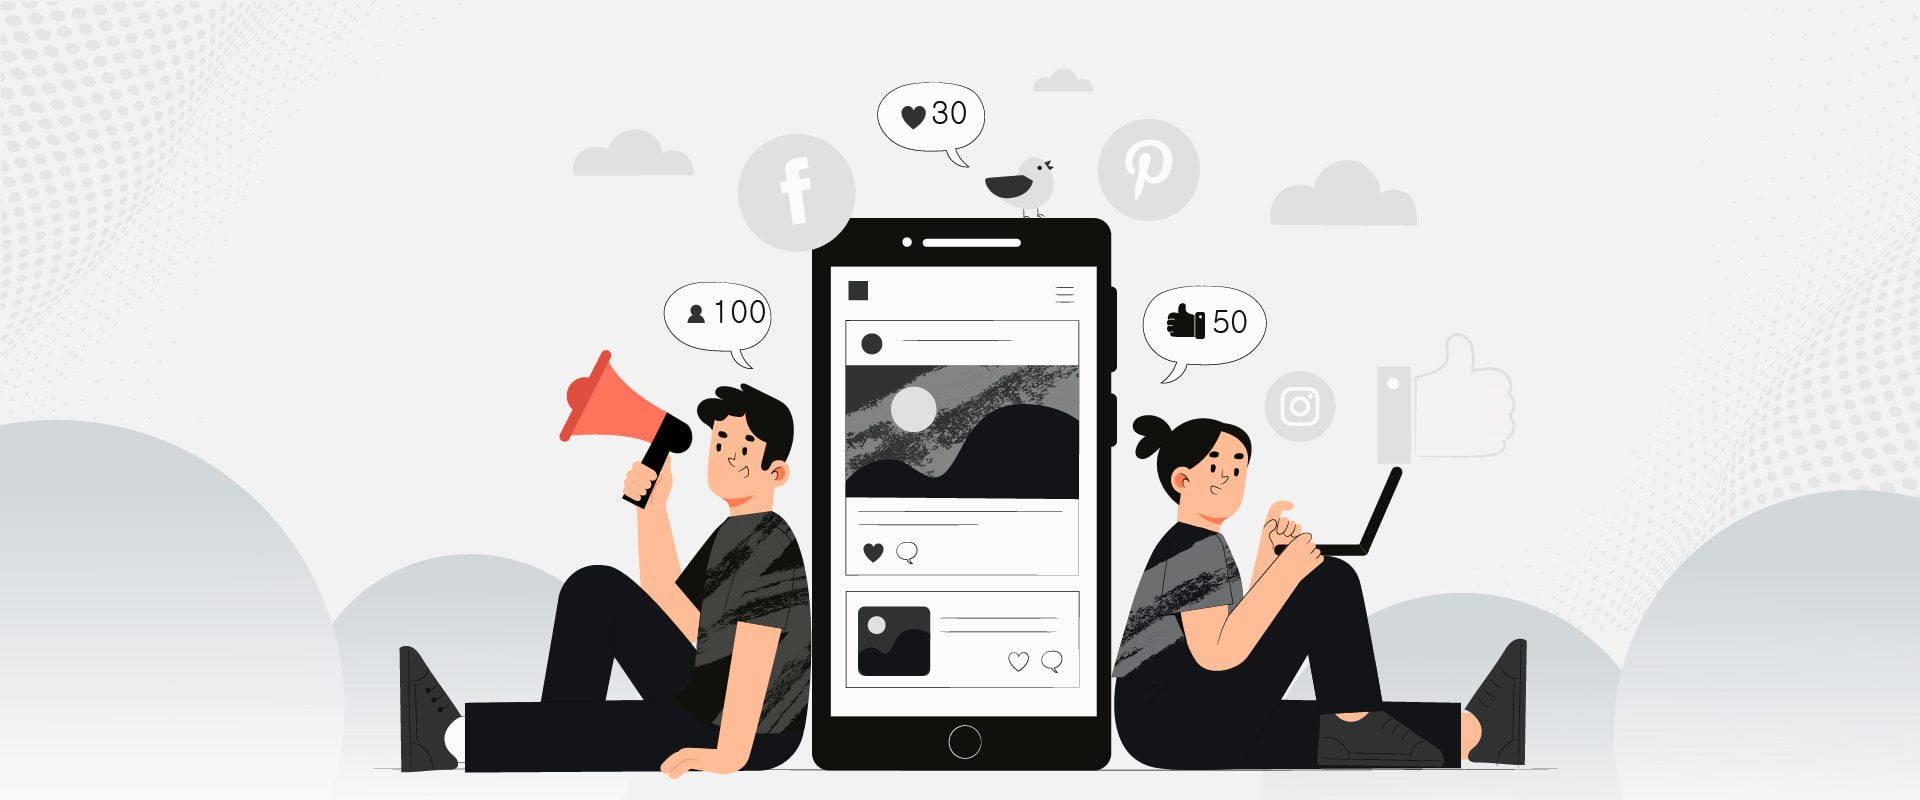 How Does Social Media Put an Effect on Marketing? Digital Marketing | Digitomark